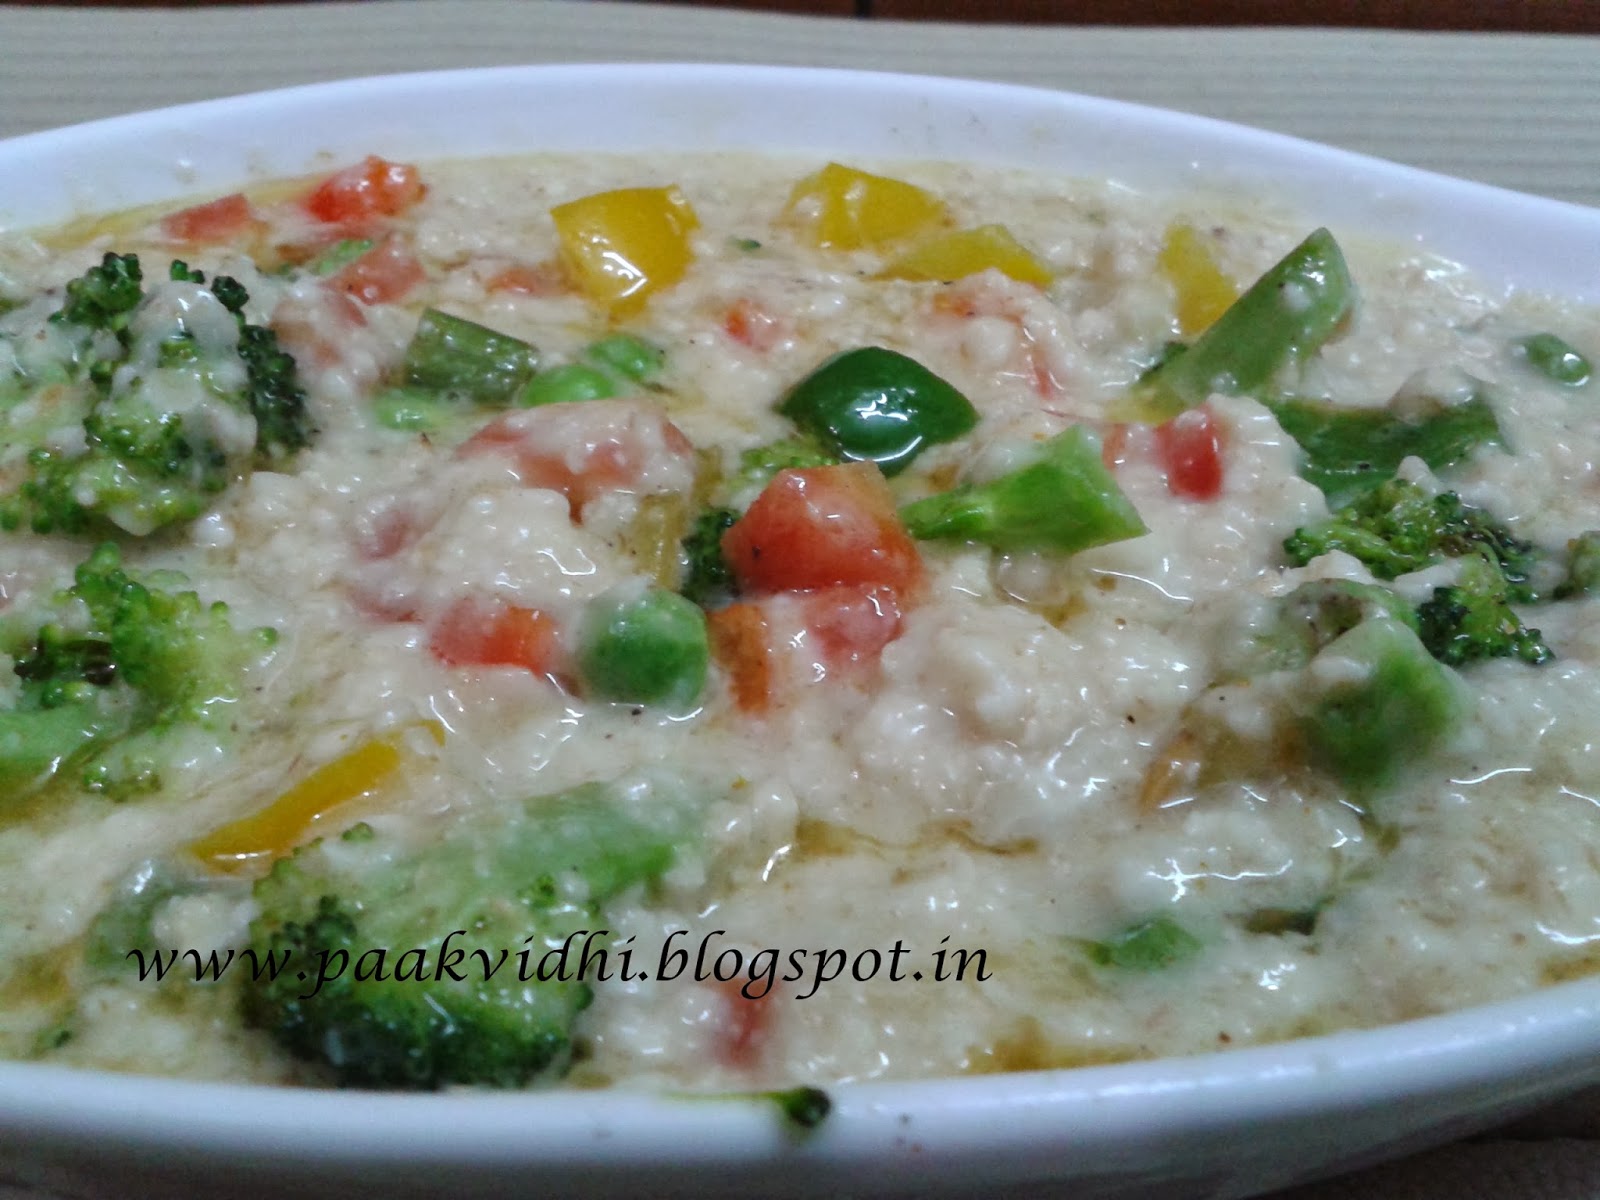 http://paakvidhi.blogspot.in/2014/01/oats-in-stir-fried-vegetables.html